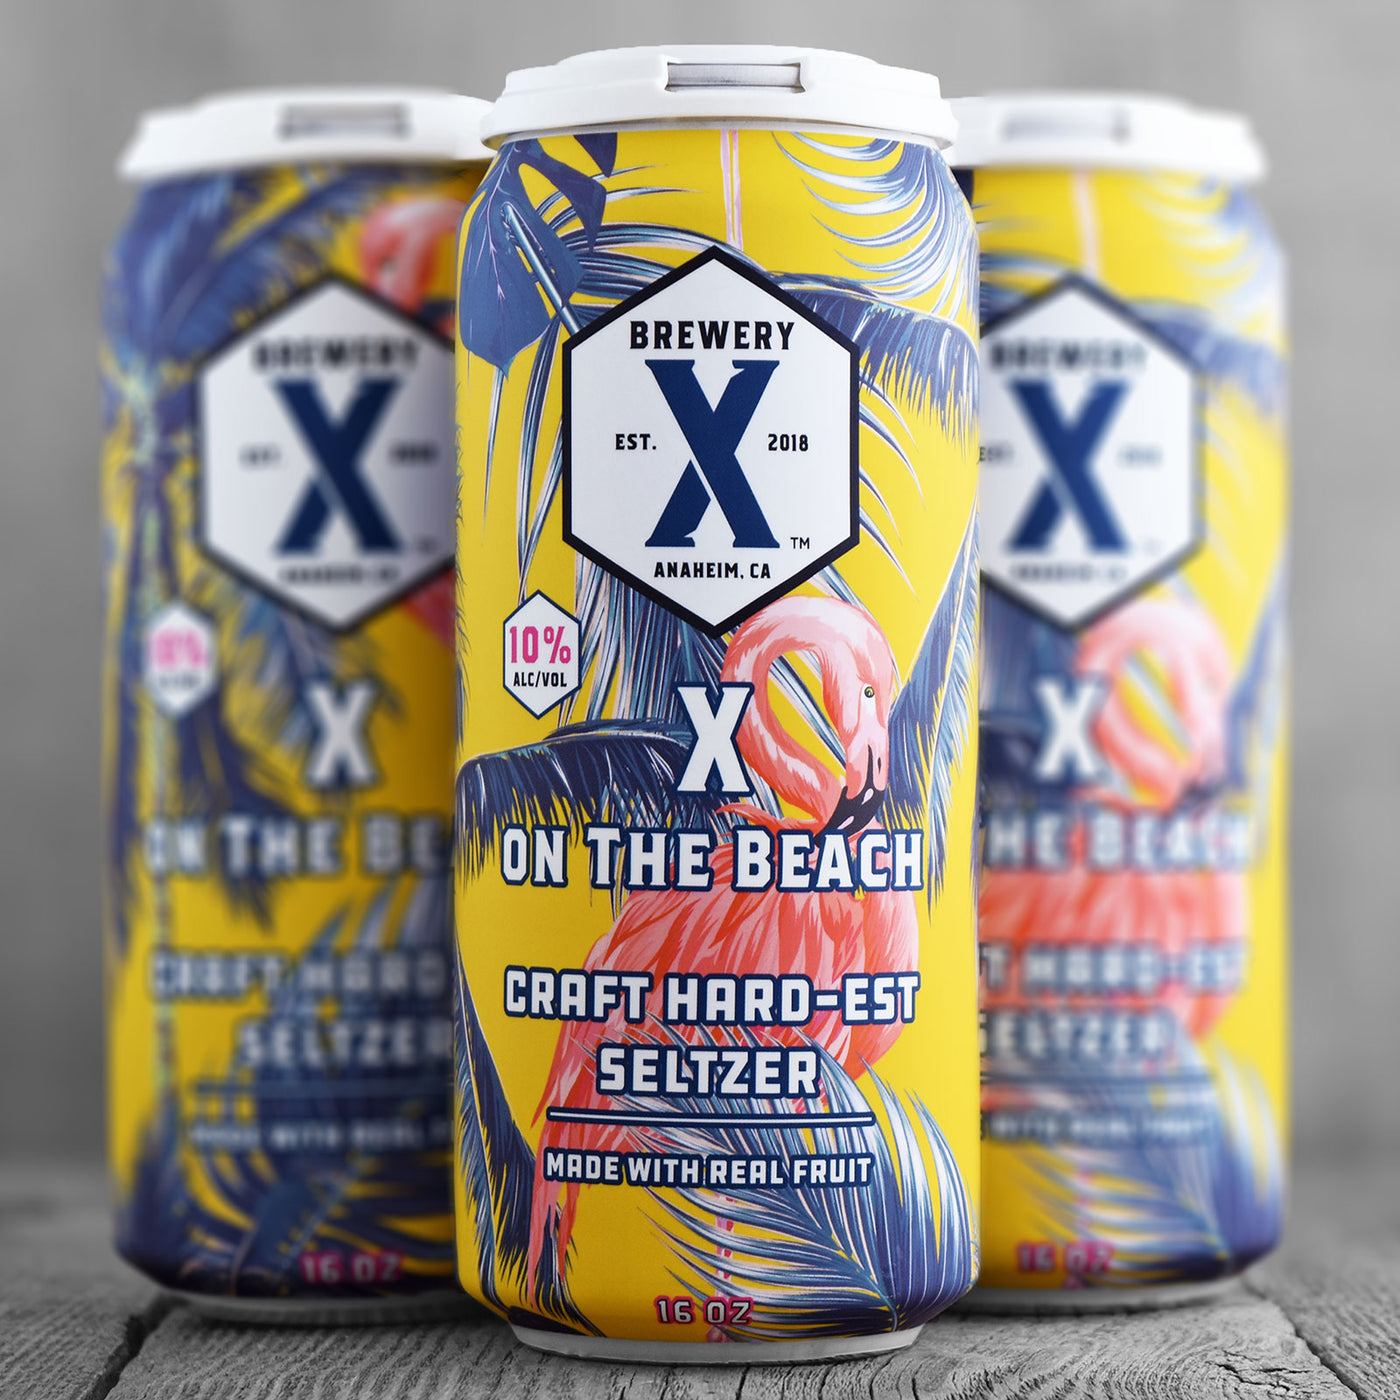 Brewery X Hartd-est Seltzer X On The Beach